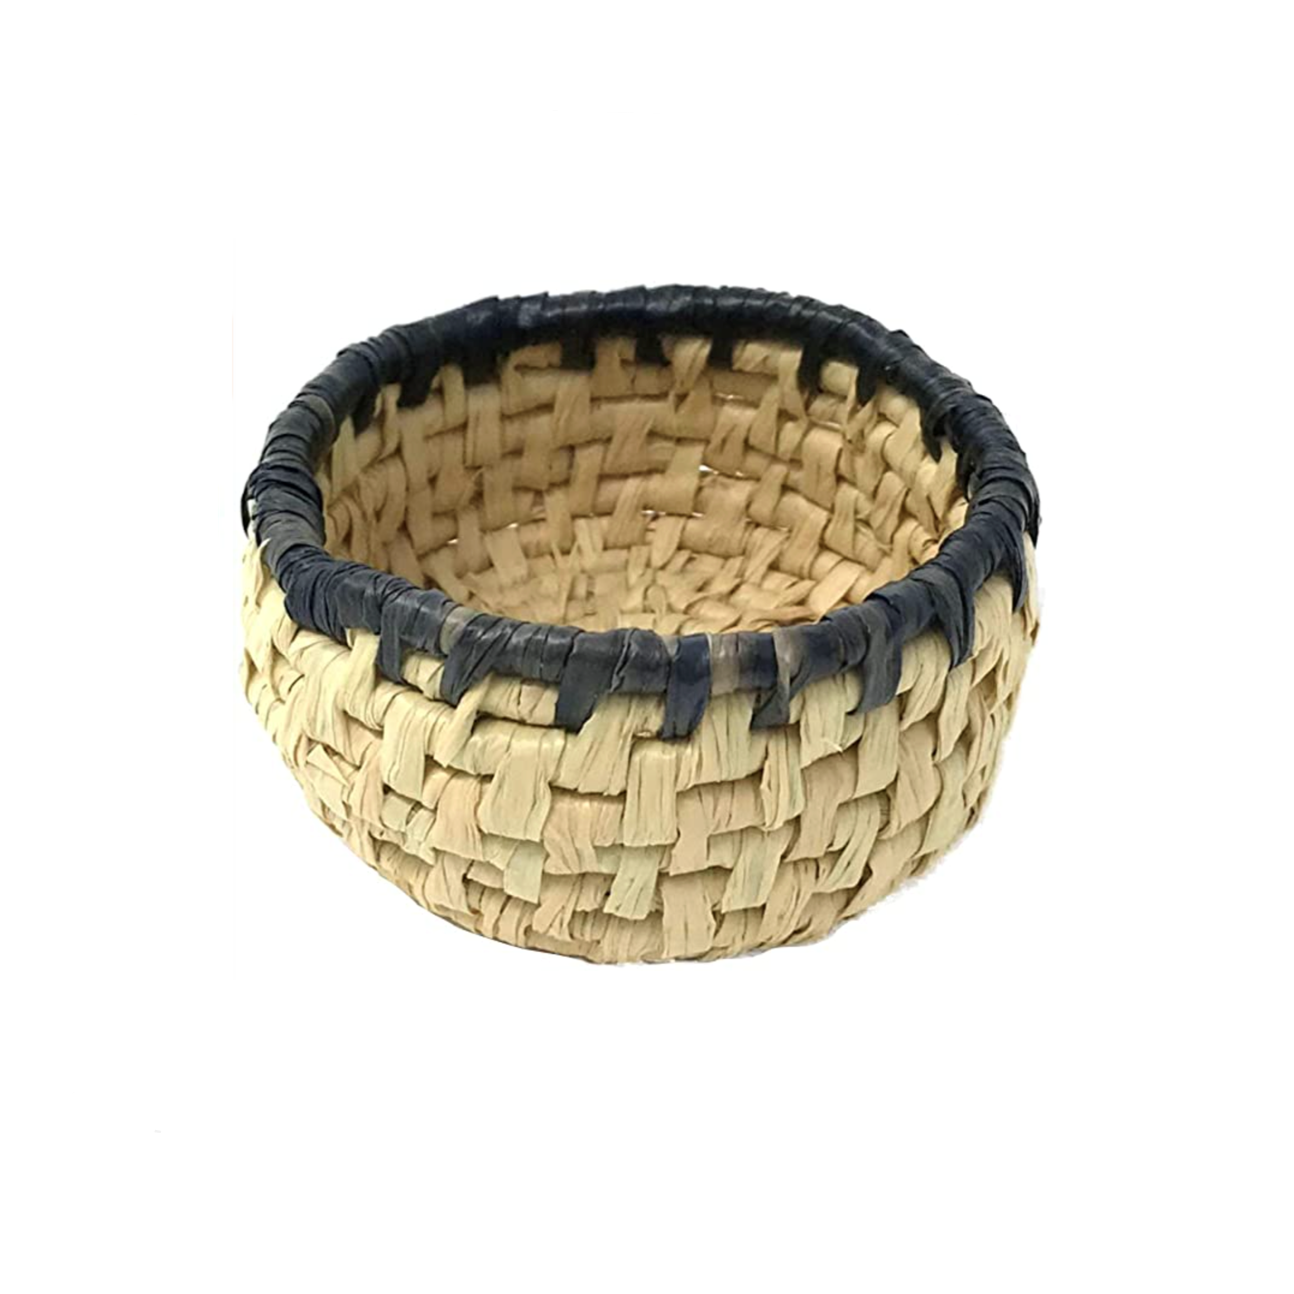 Basket Weaving Kit – Wandawega